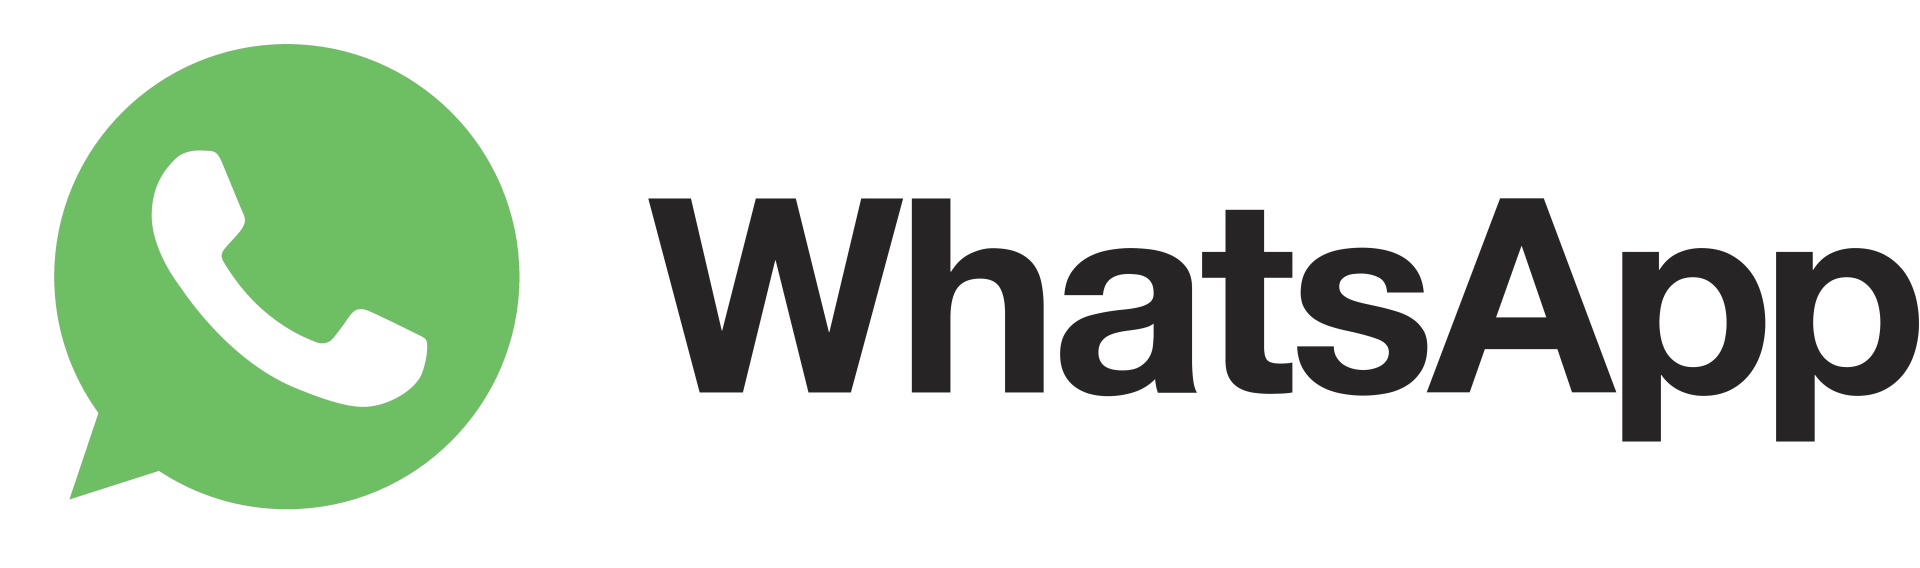 whatsapp-logo-icon-png-svg-2850d213